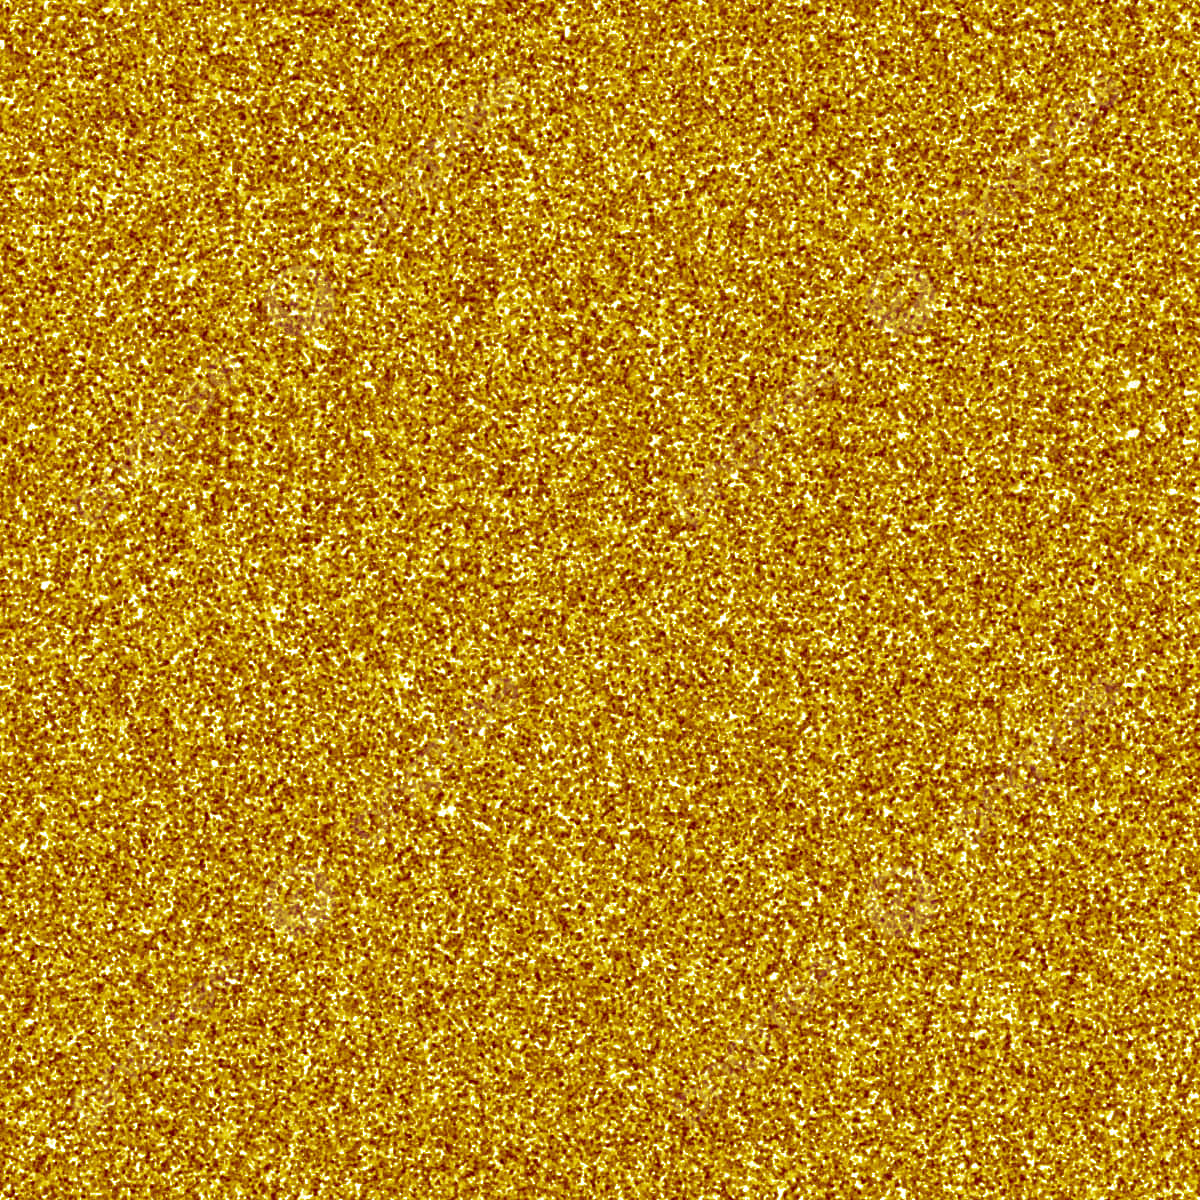 Gold Glitter Texture Background Stock Photo